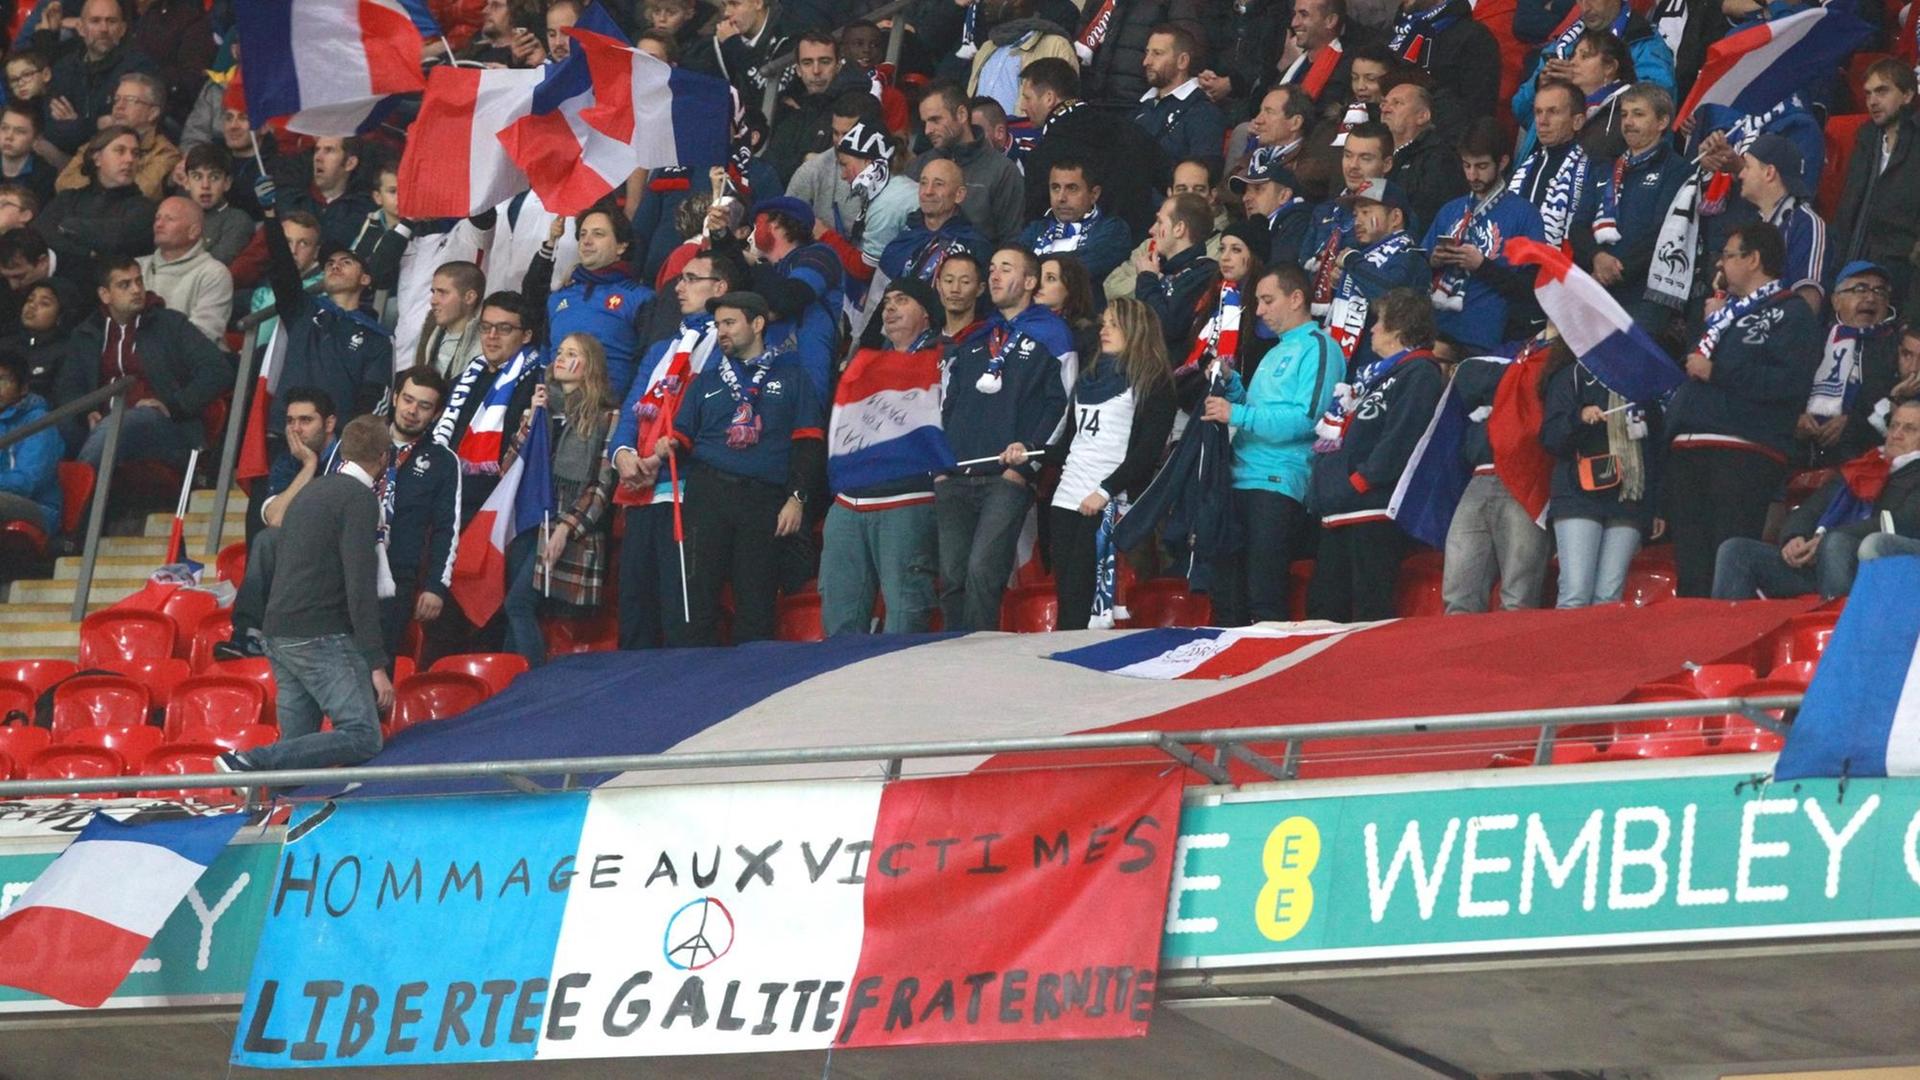 Zuschauer im Londoner Wembley-Stadion hinter einem Transparent mit der Aufschrift "Liberté-Egalité-Fraternité"